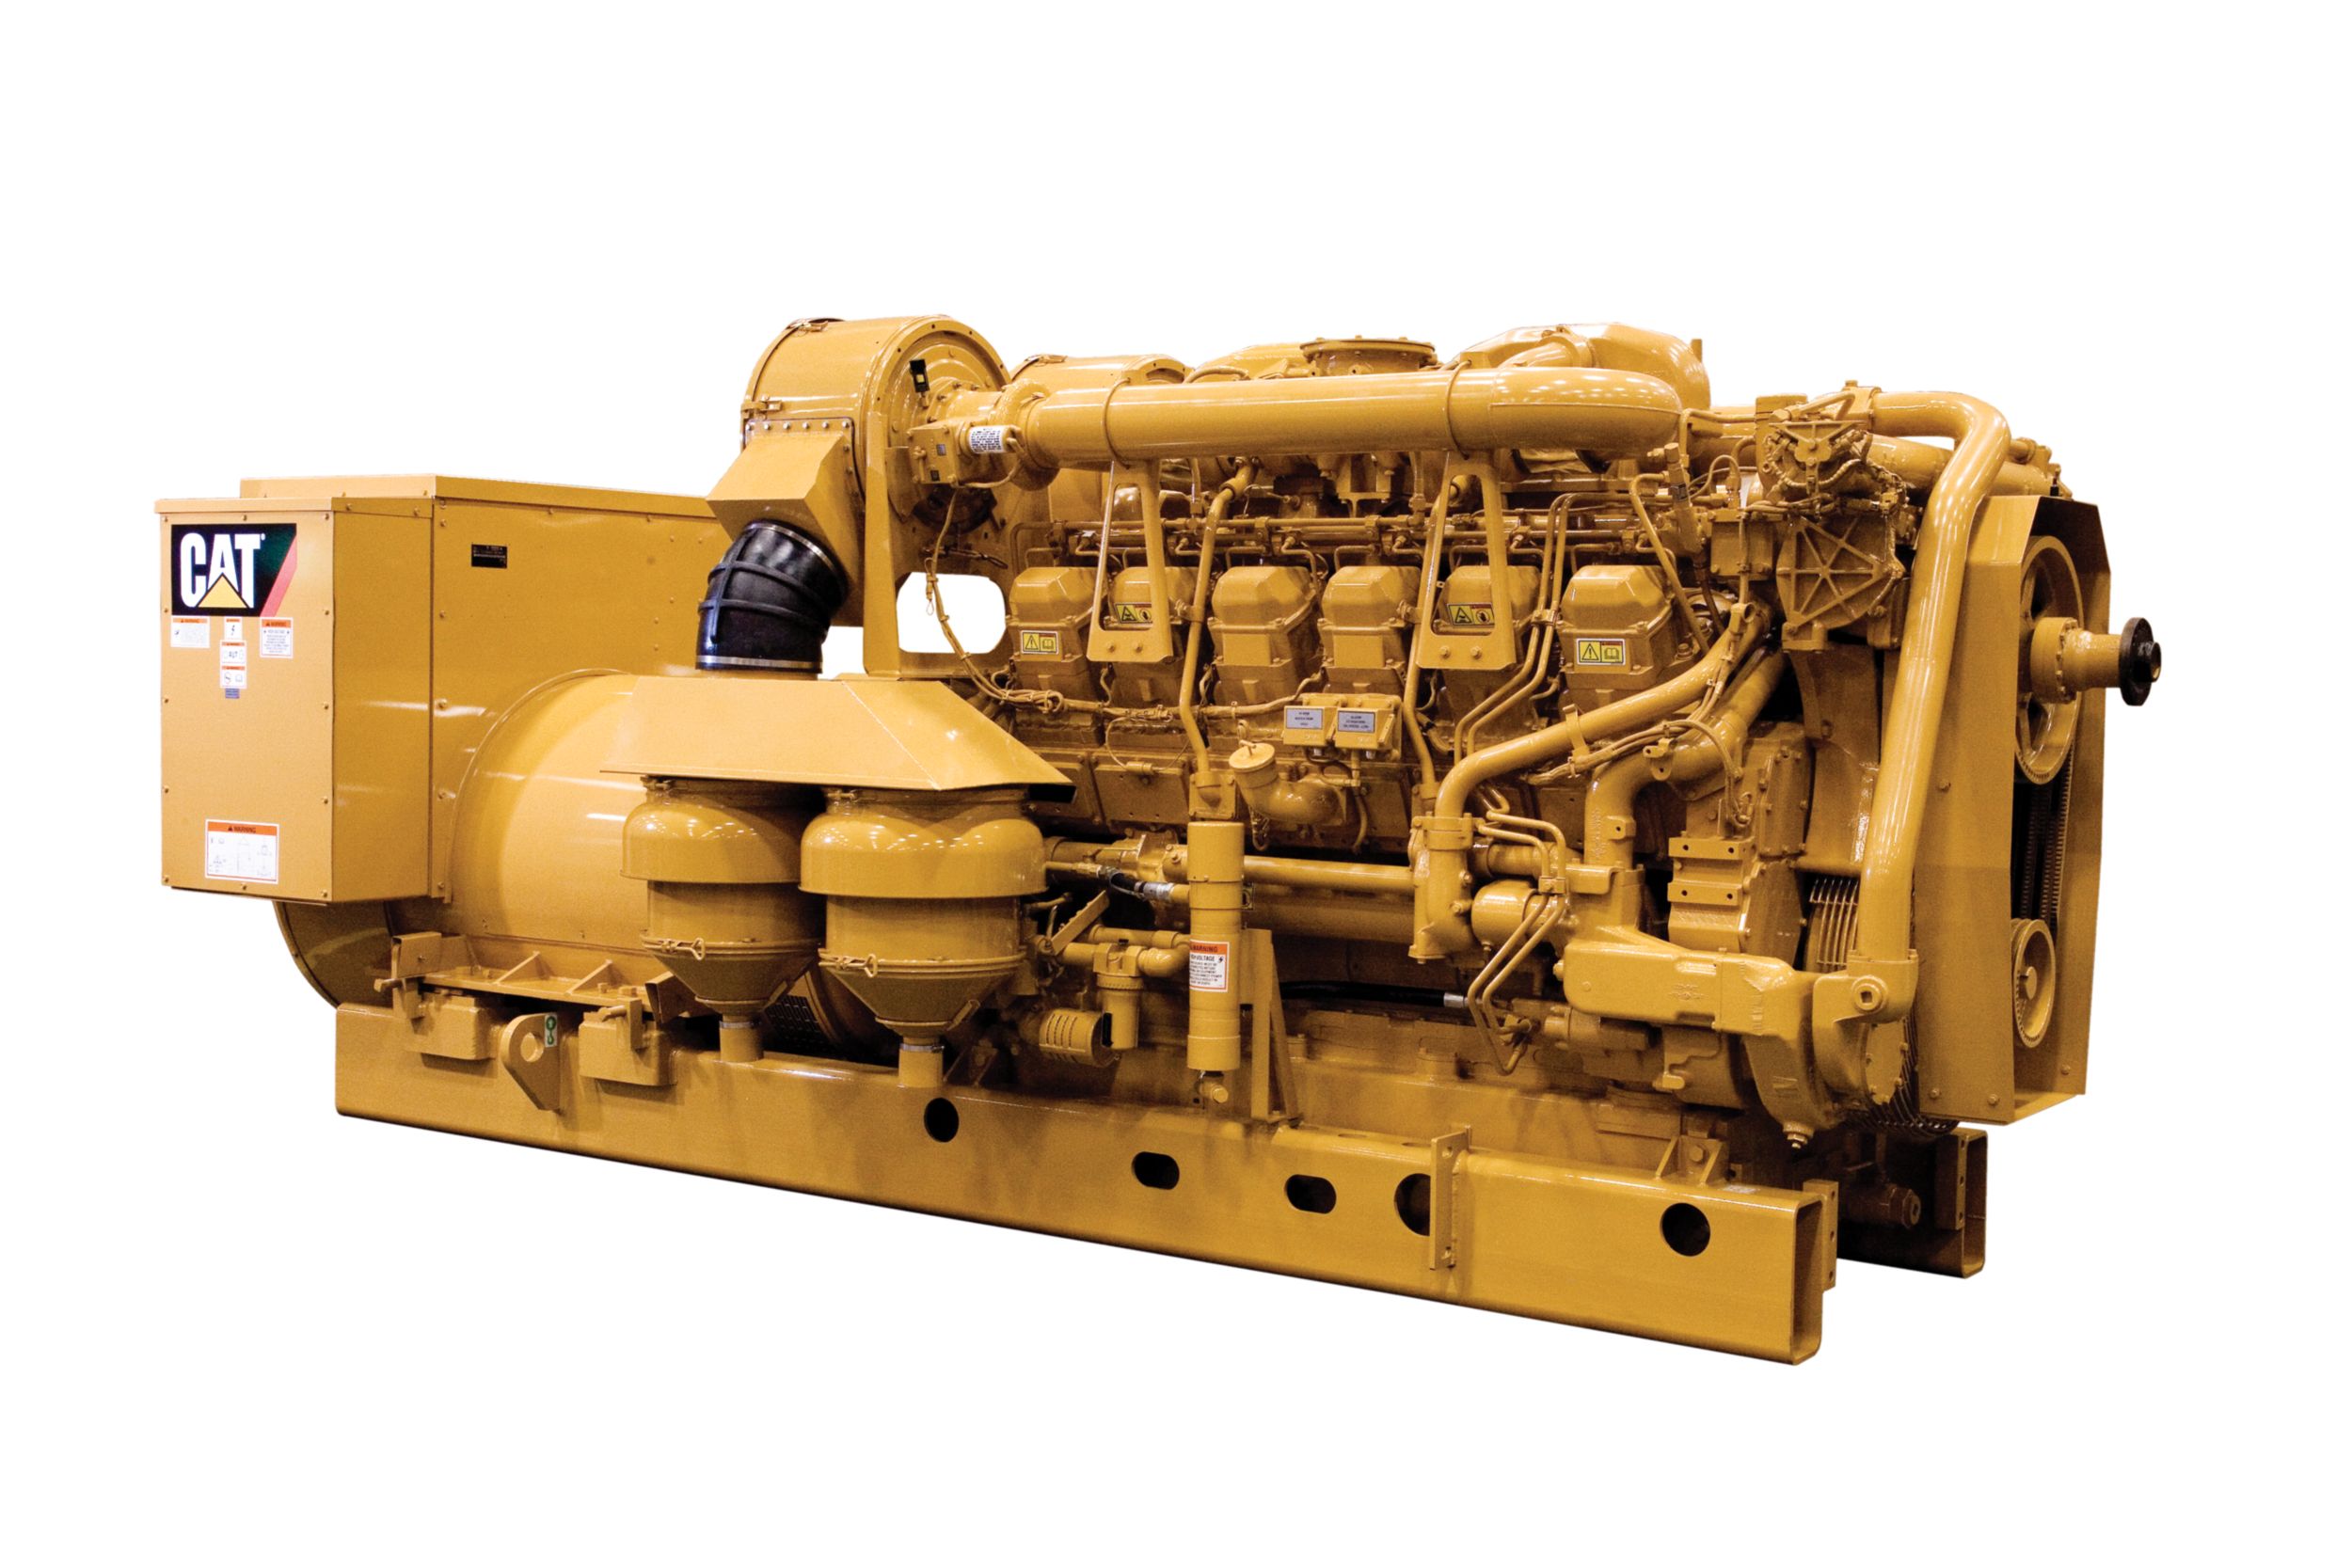 3512 Land Mechanical Drilling Engine